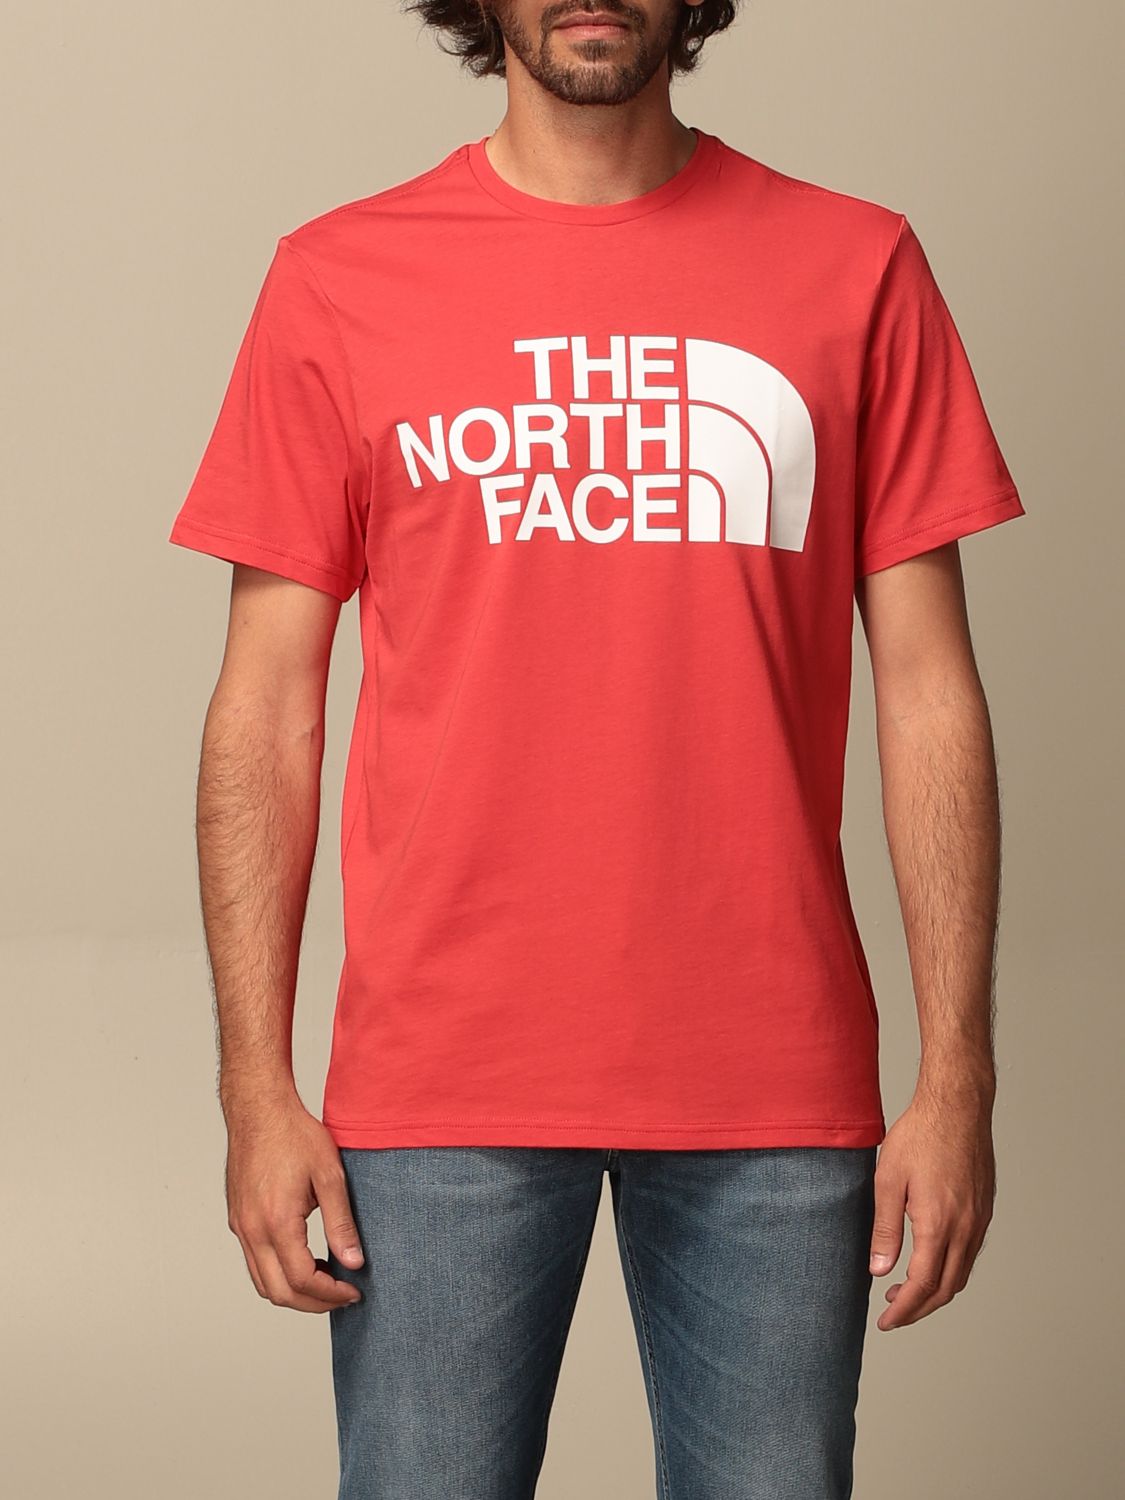 The North Face T Shirt Men T Shirt The North Face Men Red T Shirt The North Face Nf0a4m7x Giglio En